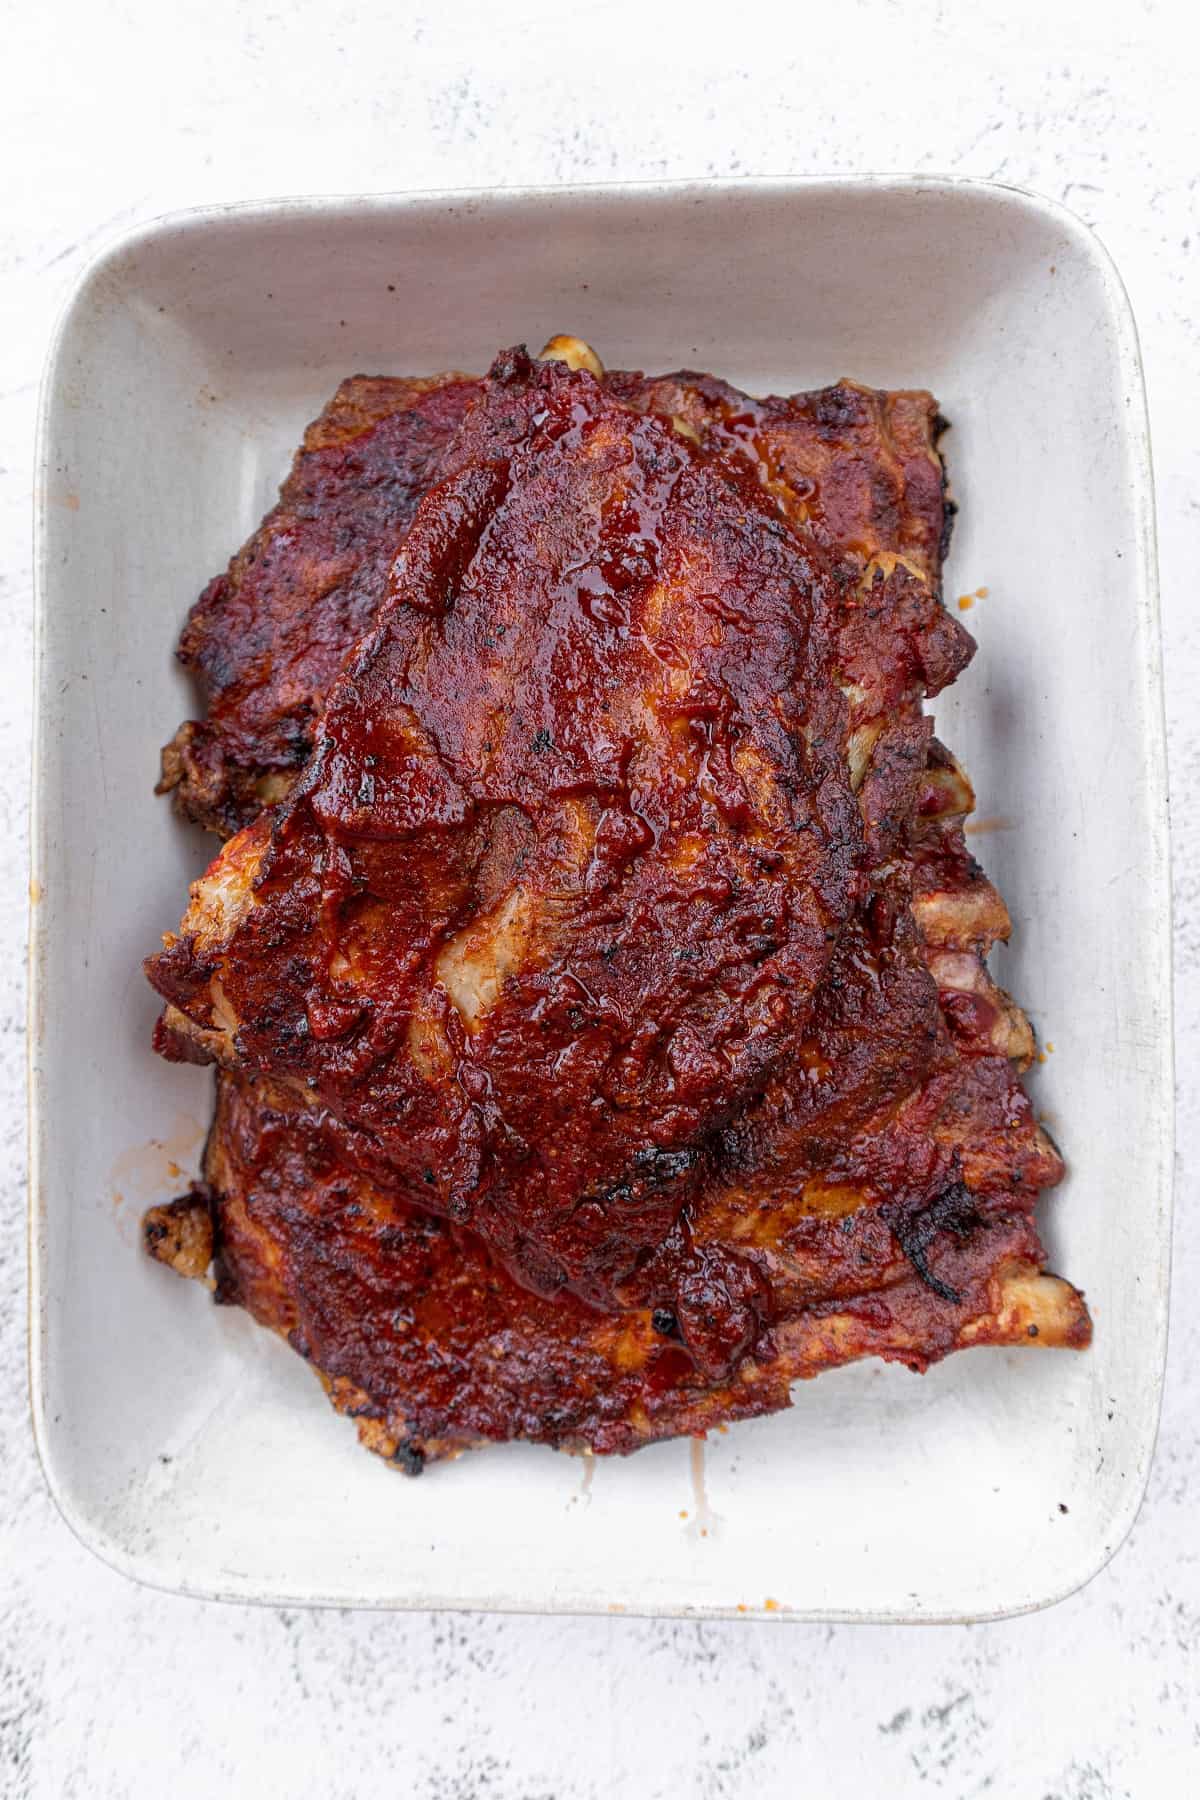 Fall off the bone BBQ pork ribs on ceramic tray